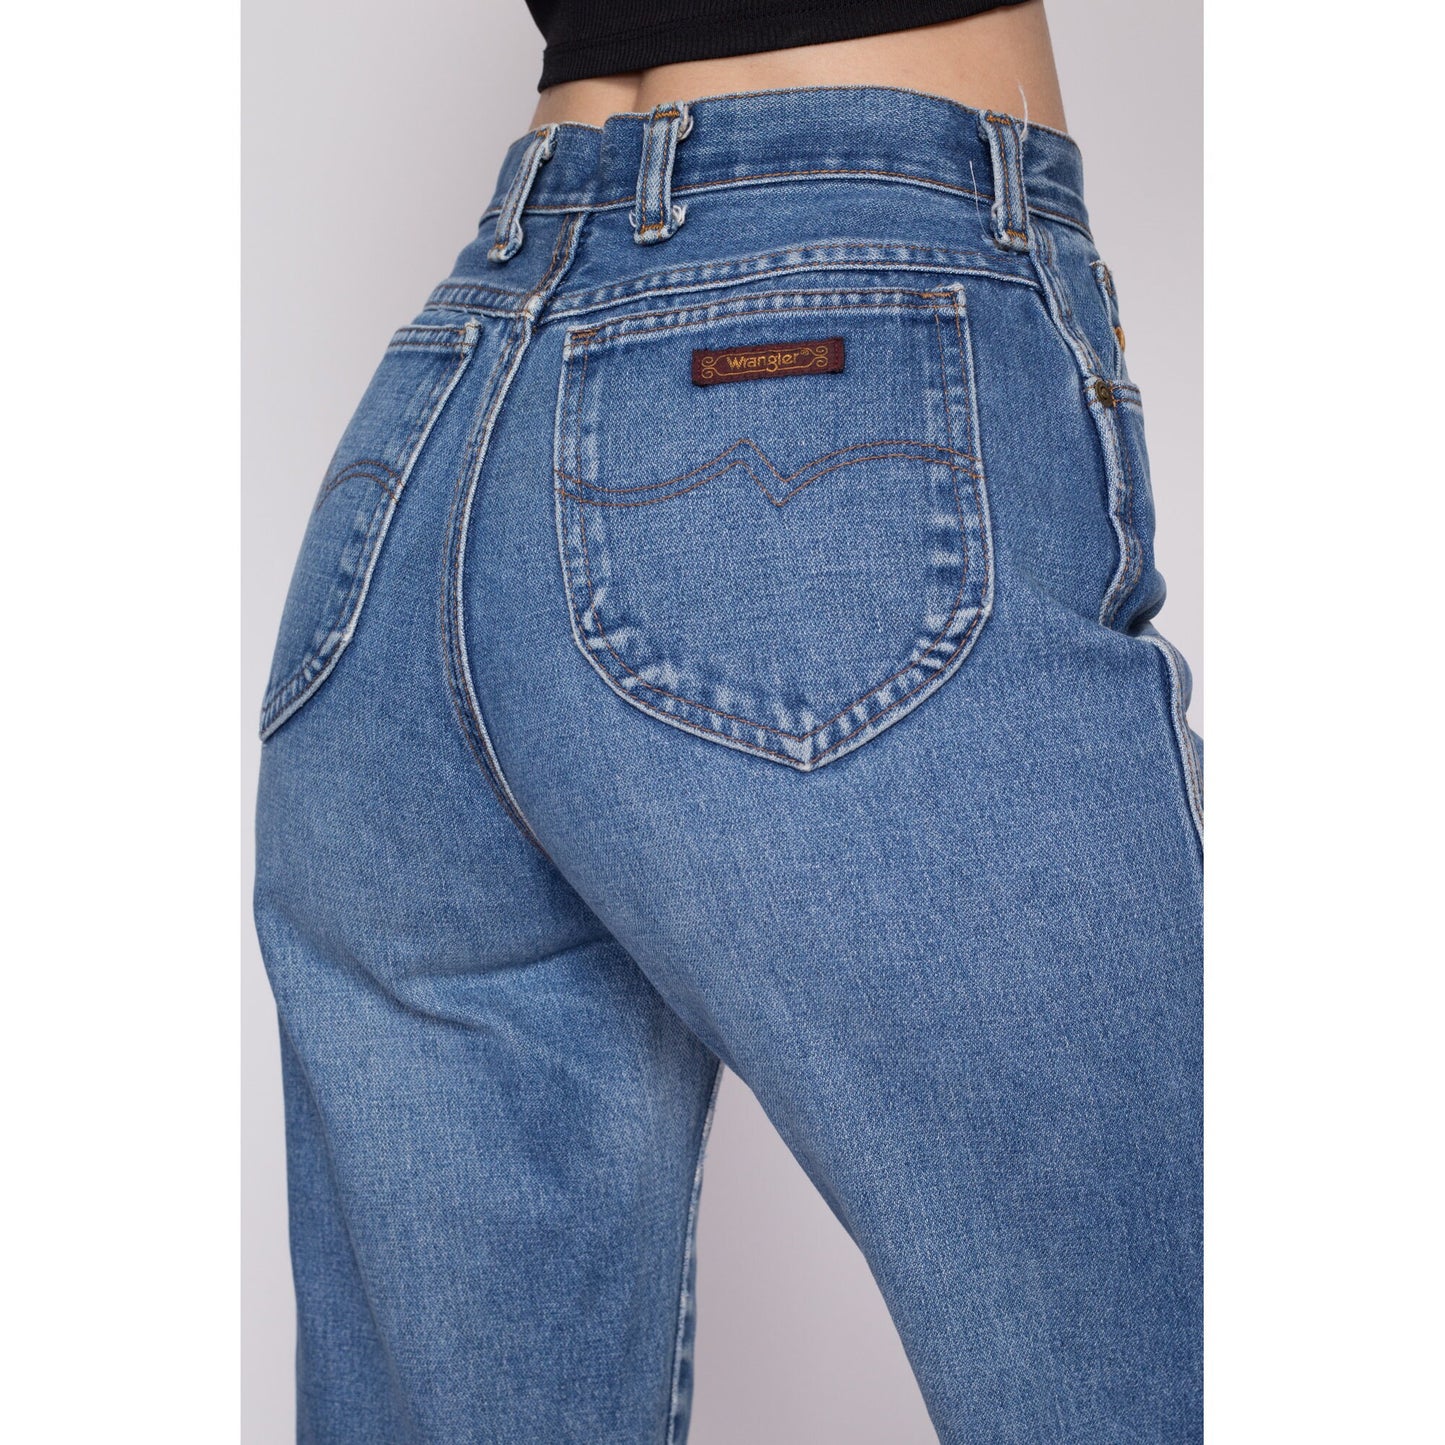 Small 70s Wrangler High Waisted Jeans 26" | Vintage Straight Leg Soft Denim Mom Jeans